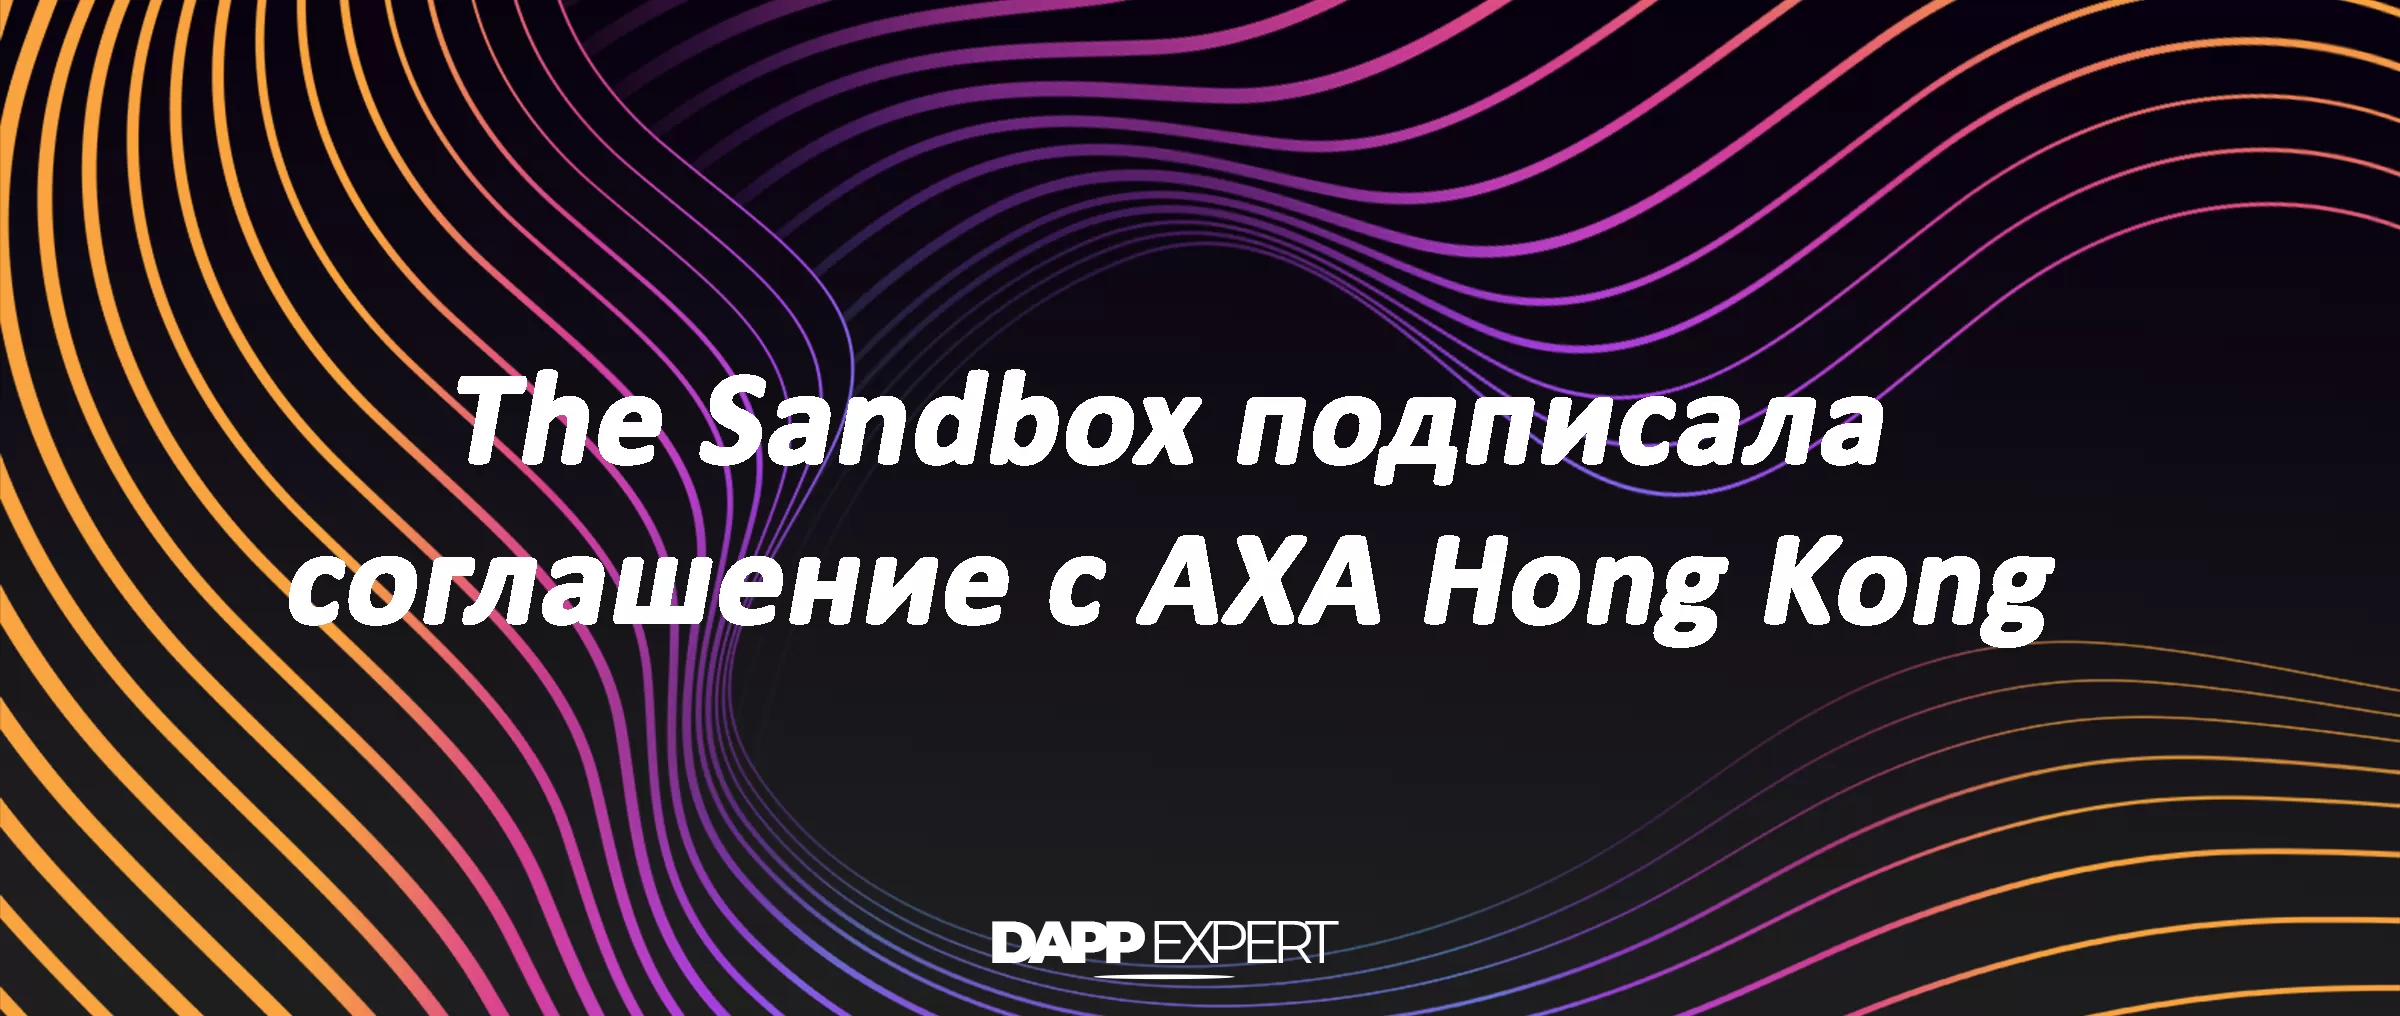 The Sandbox подписала соглашение с AXA Hong Kong